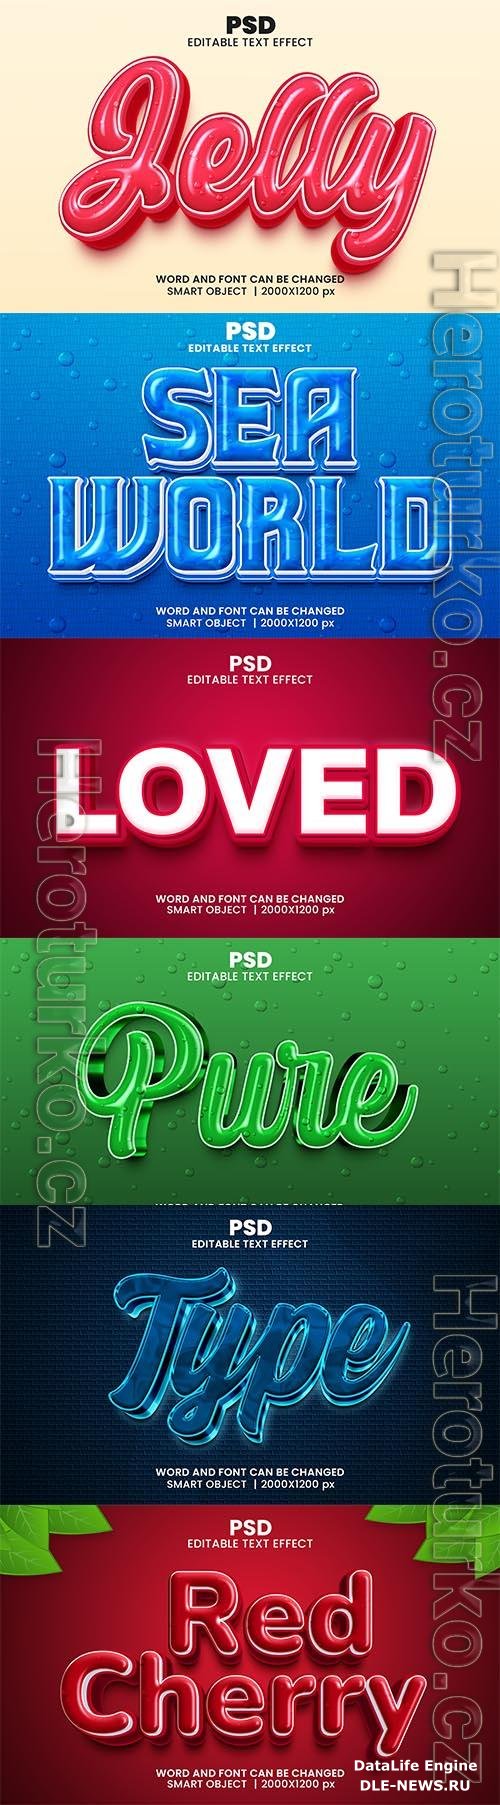 Psd style text effect editable set vol 5